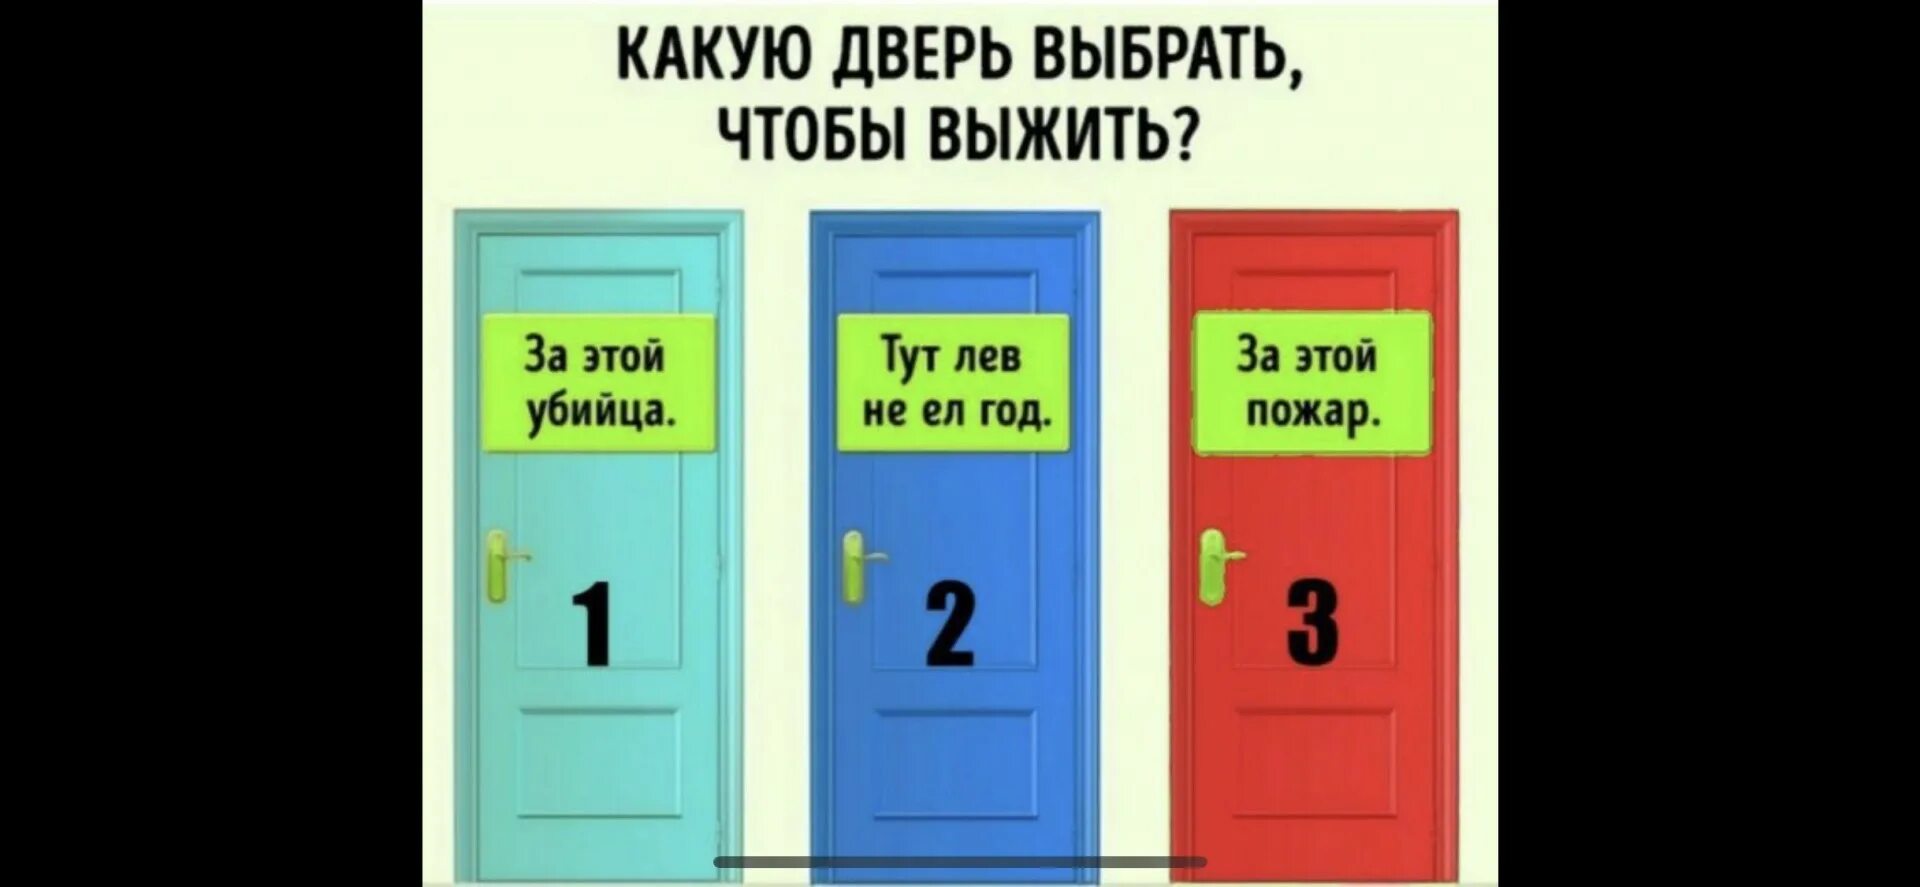 Загадка про две двери. Дверь 2 на 2. Задача про охранников и двери. Загадка про 2 двери и двух охранников.